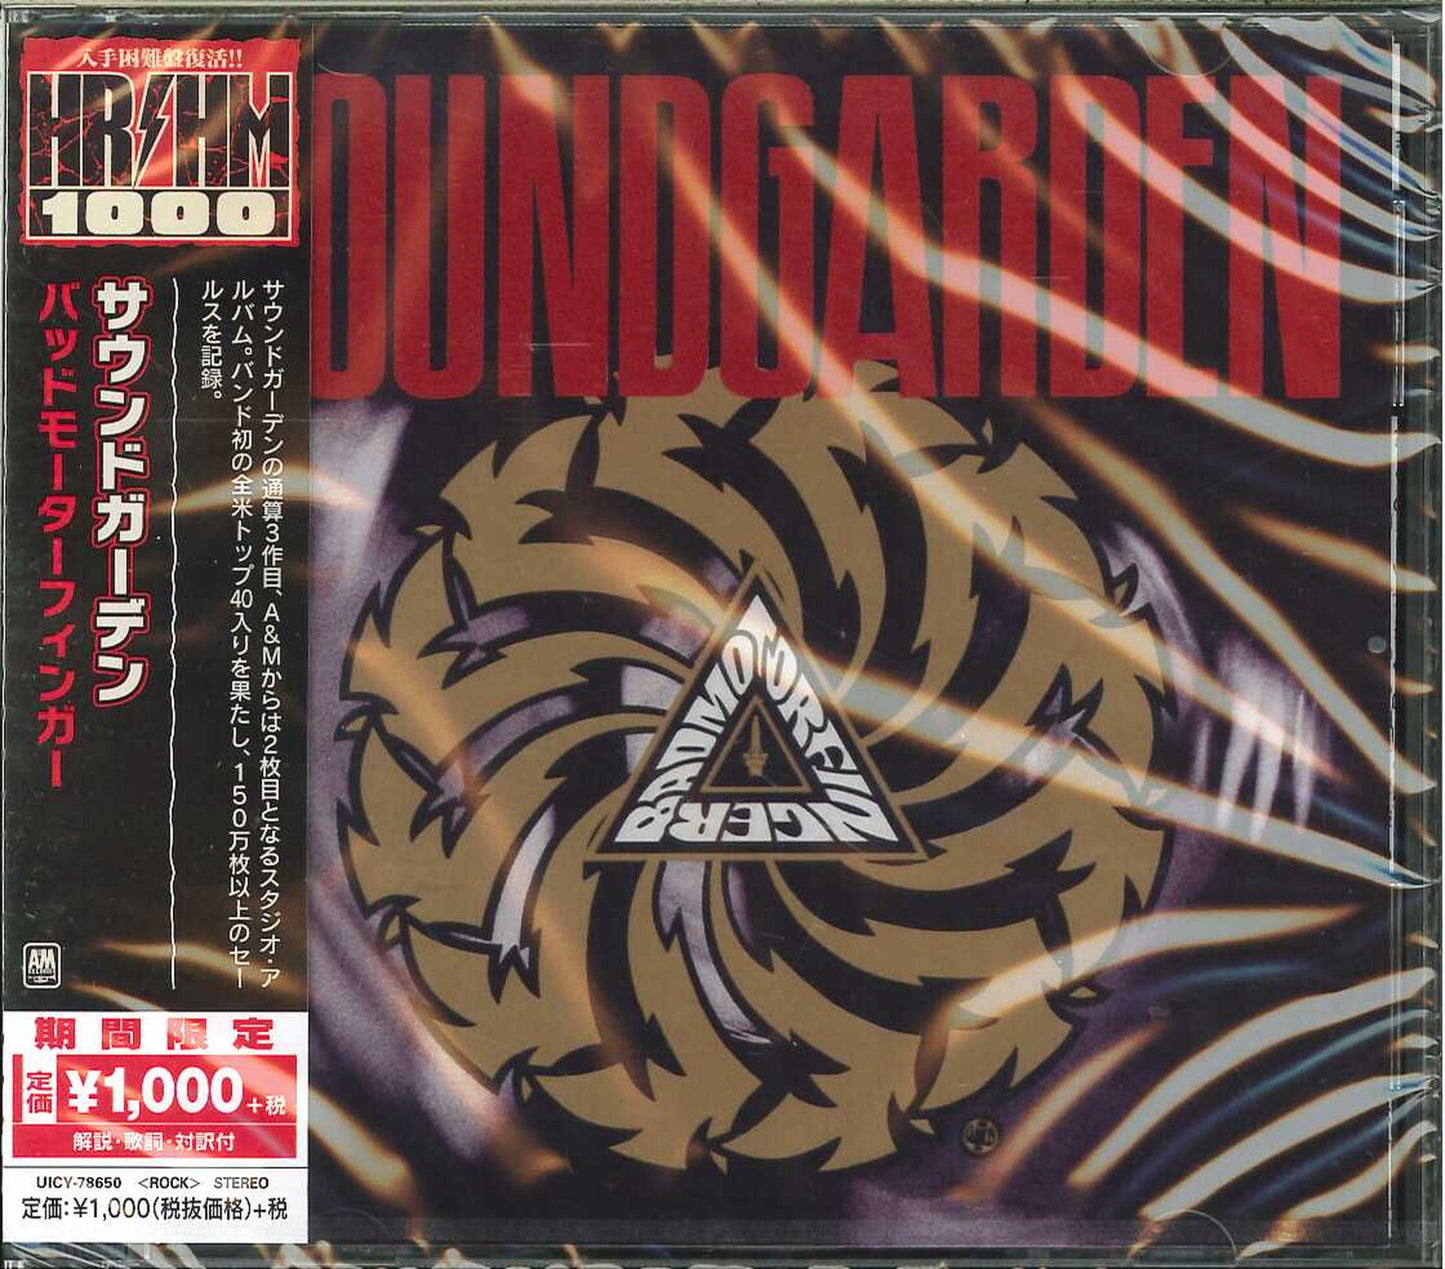 Soundgarden - Badmotorfinger - Japan  CD Limited Edition